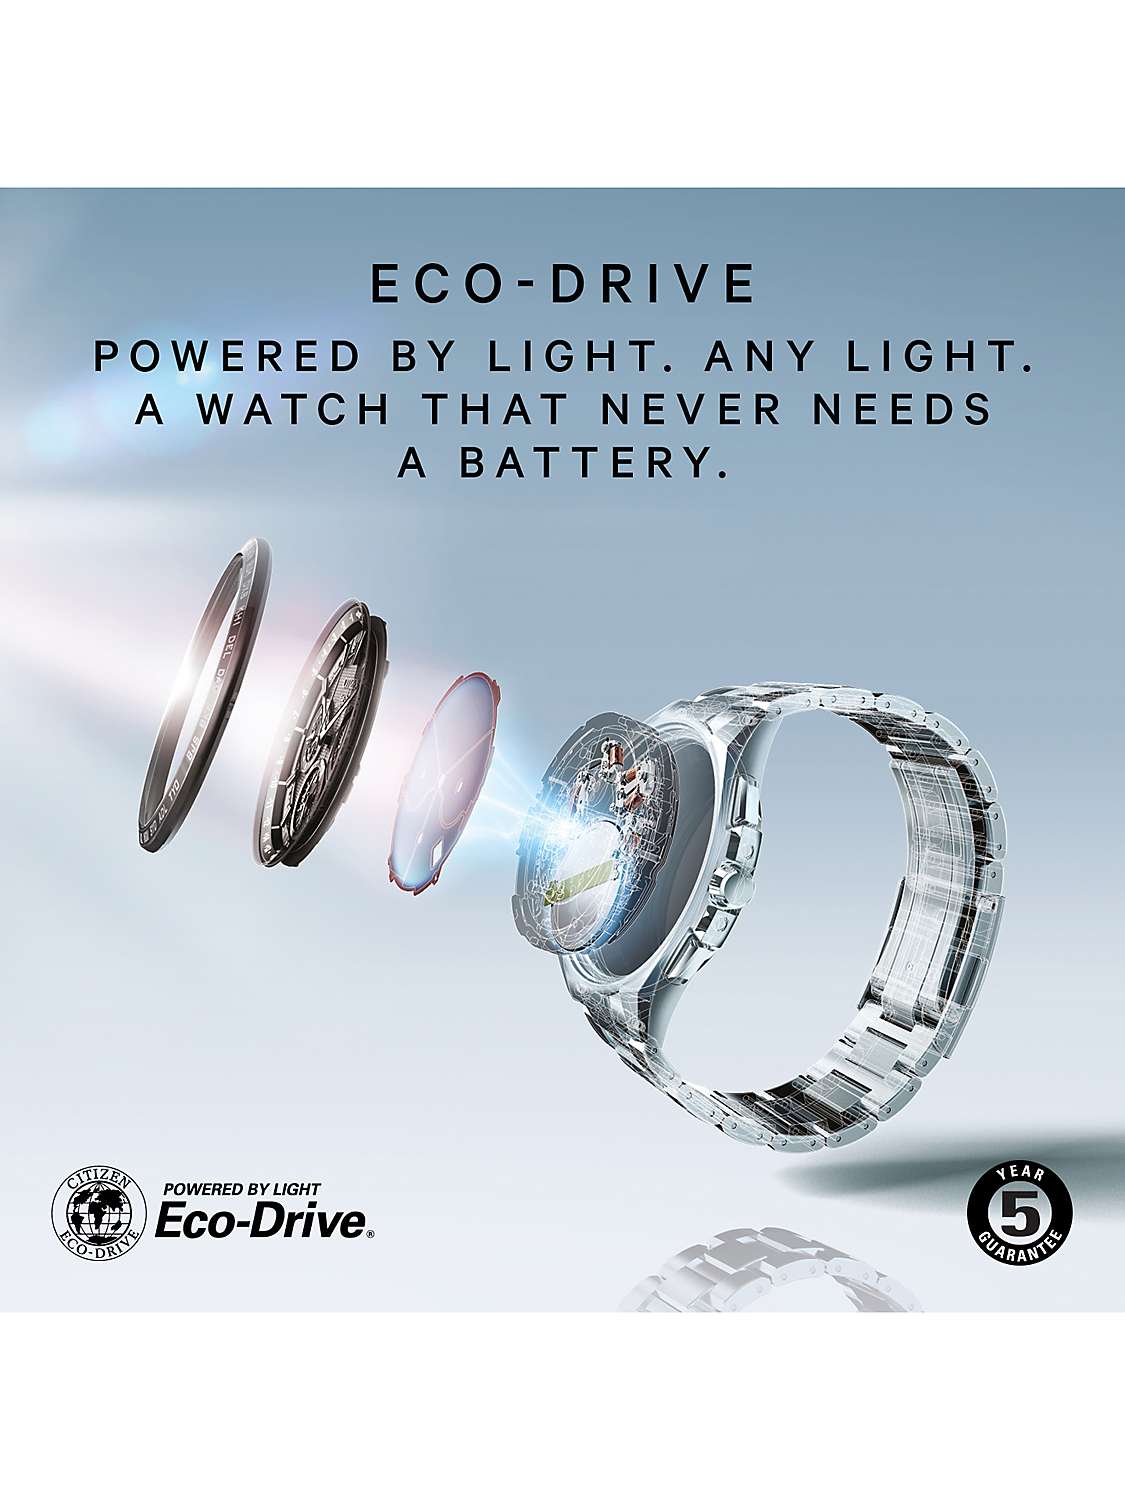 Buy Citizen EW2294-53L Women's Eco-Drive Date Two Tone Bracelet Strap Watch, Gold/Silver/Blue Online at johnlewis.com